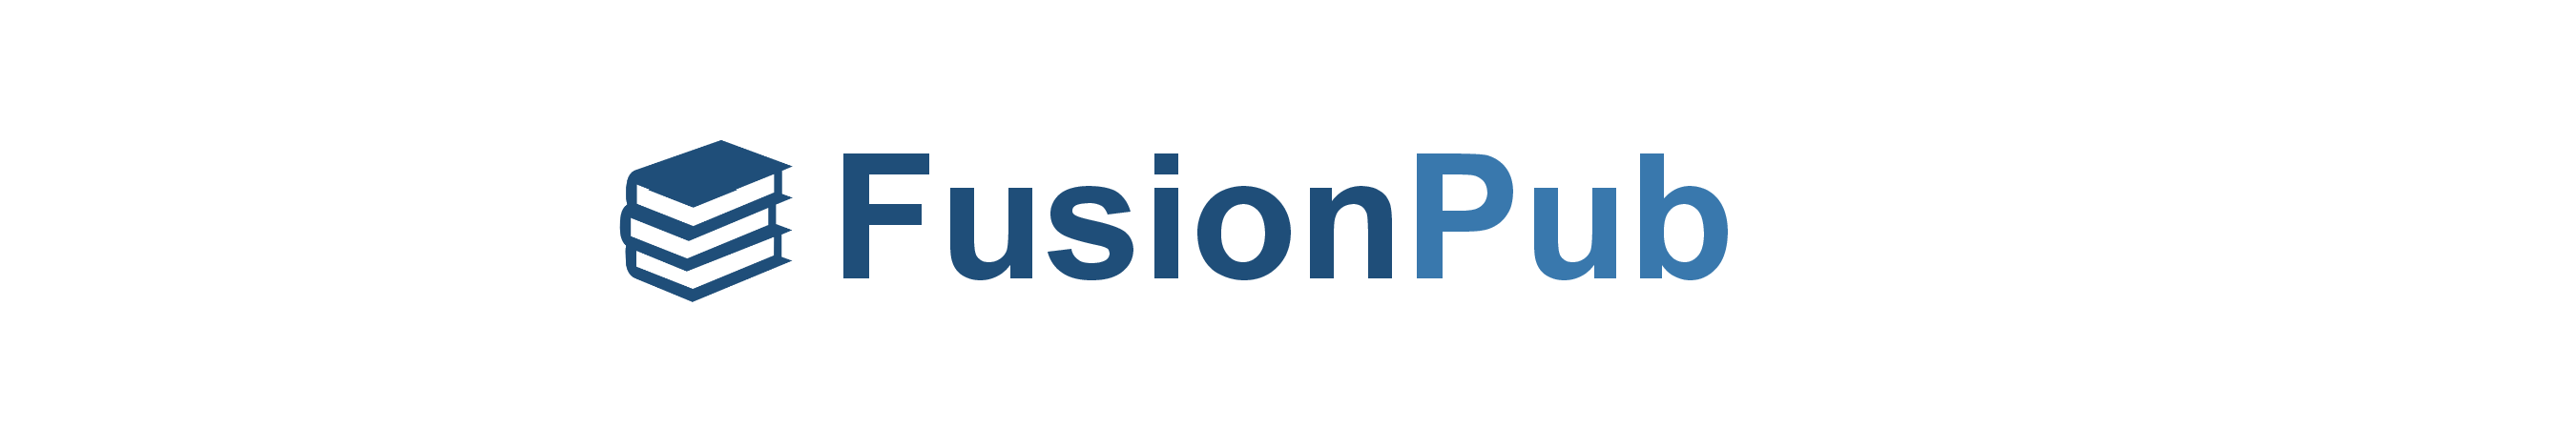 FusionPub Logo